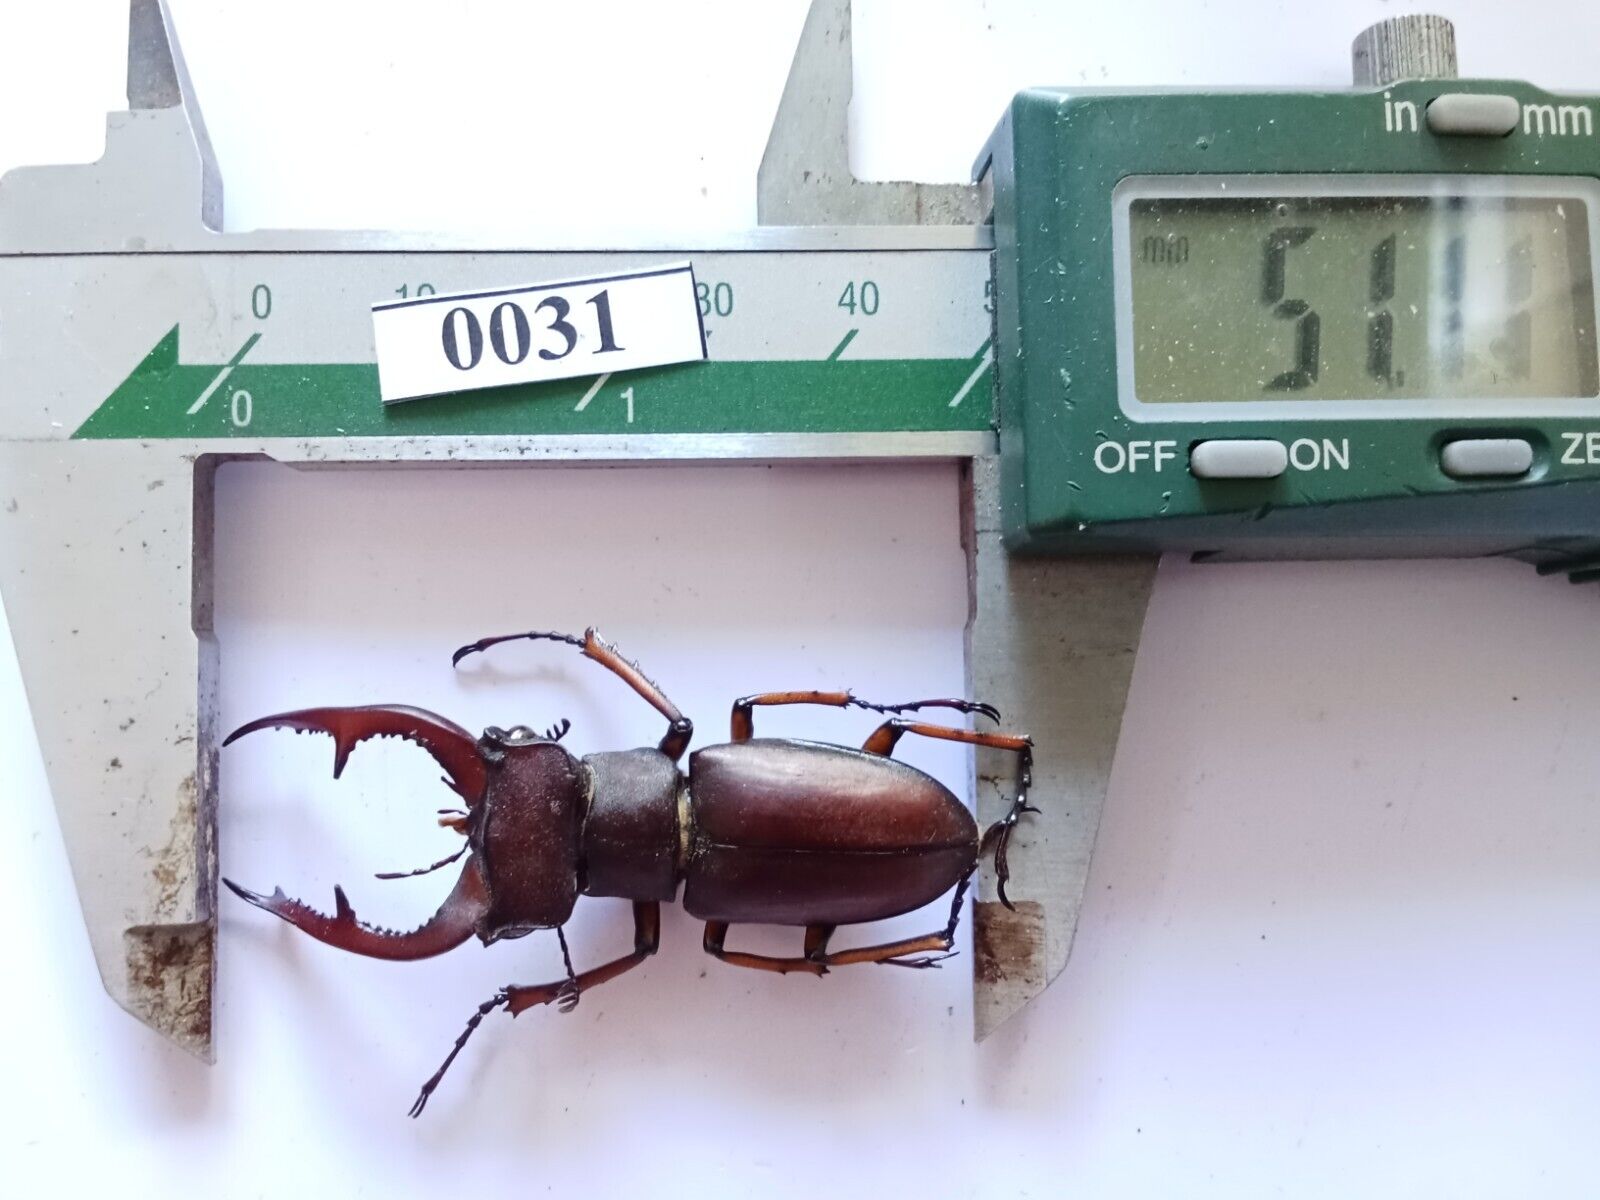 0031# Vietnam Beetles    Lucanidae- Lucanus  marazziorum  51mm A1 